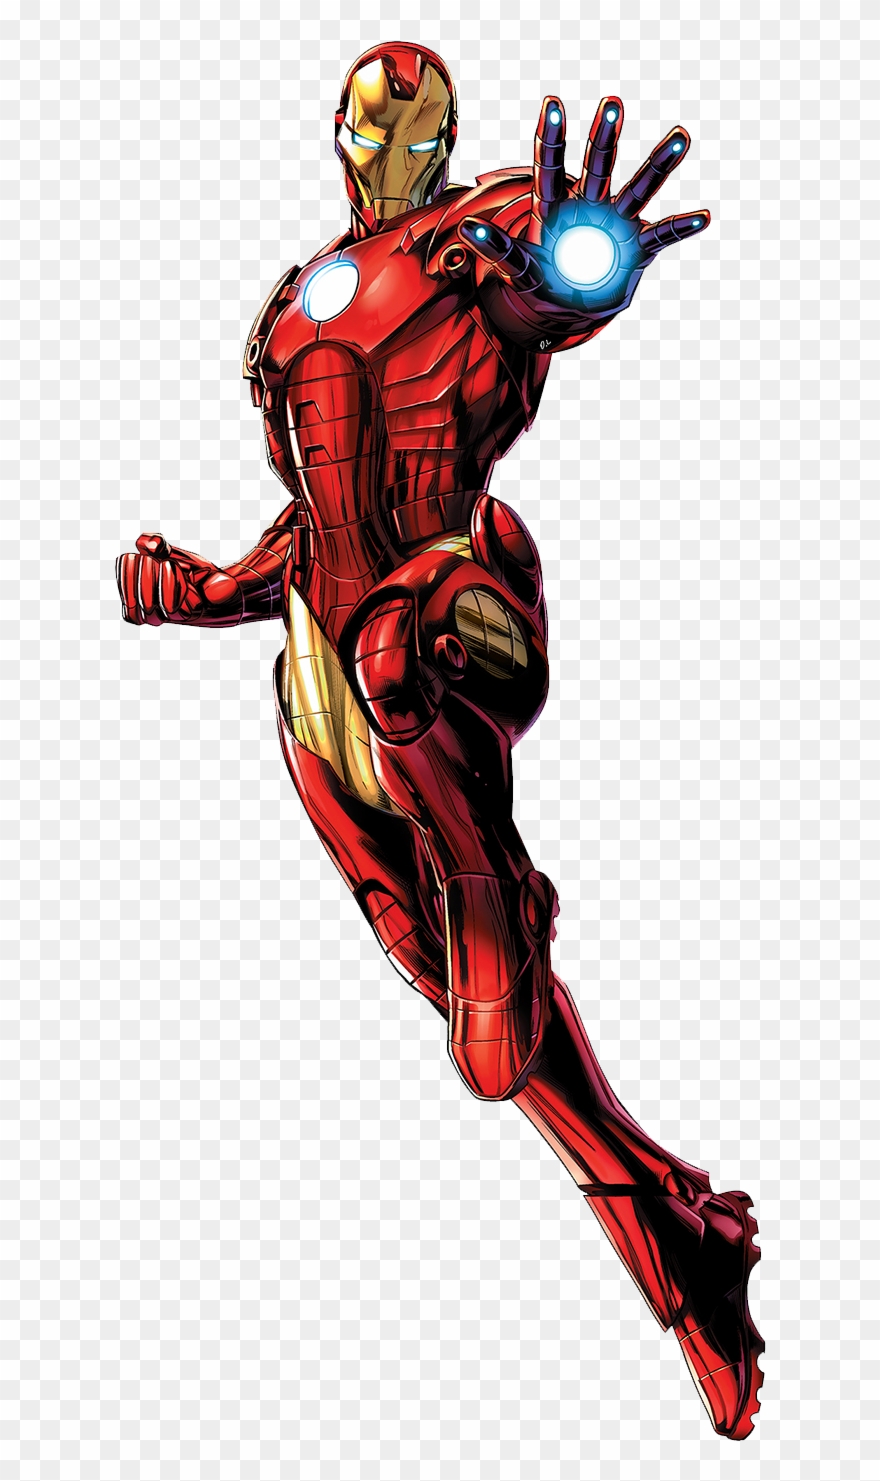 Marvel avengers iron.